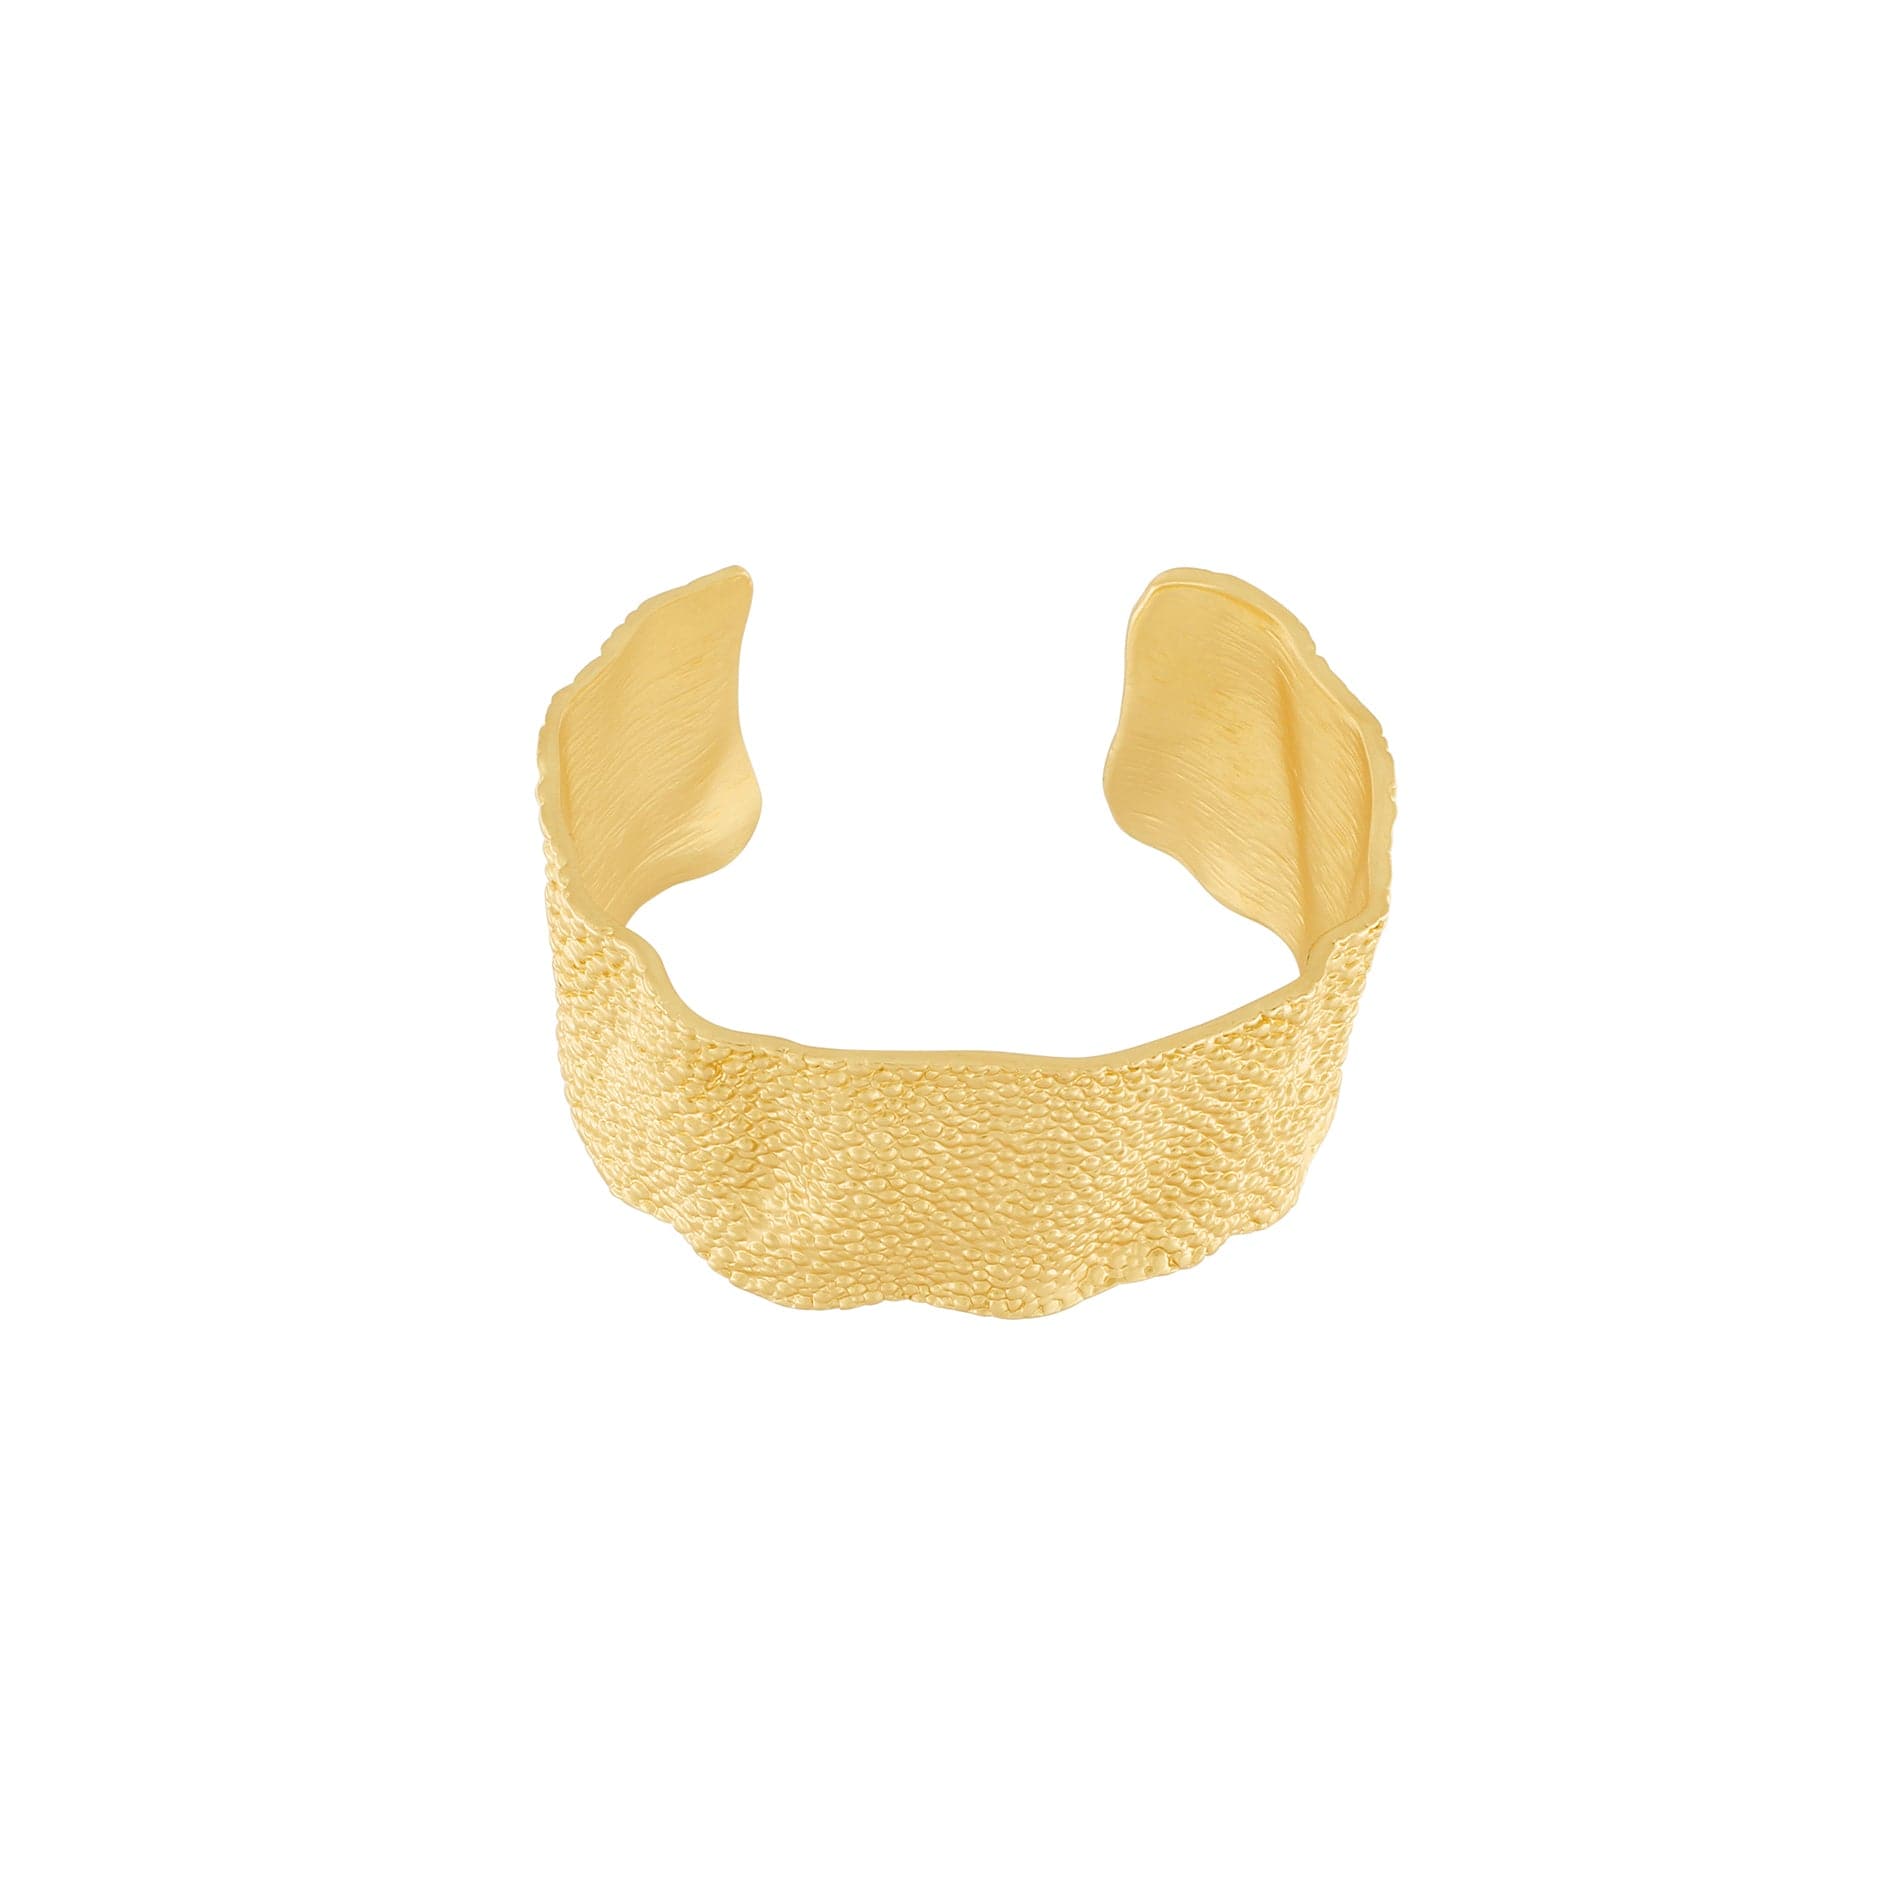 Nostalgia Diagonal Statement Cuff Bracelet Gold Plating I Dansk Copenhagen